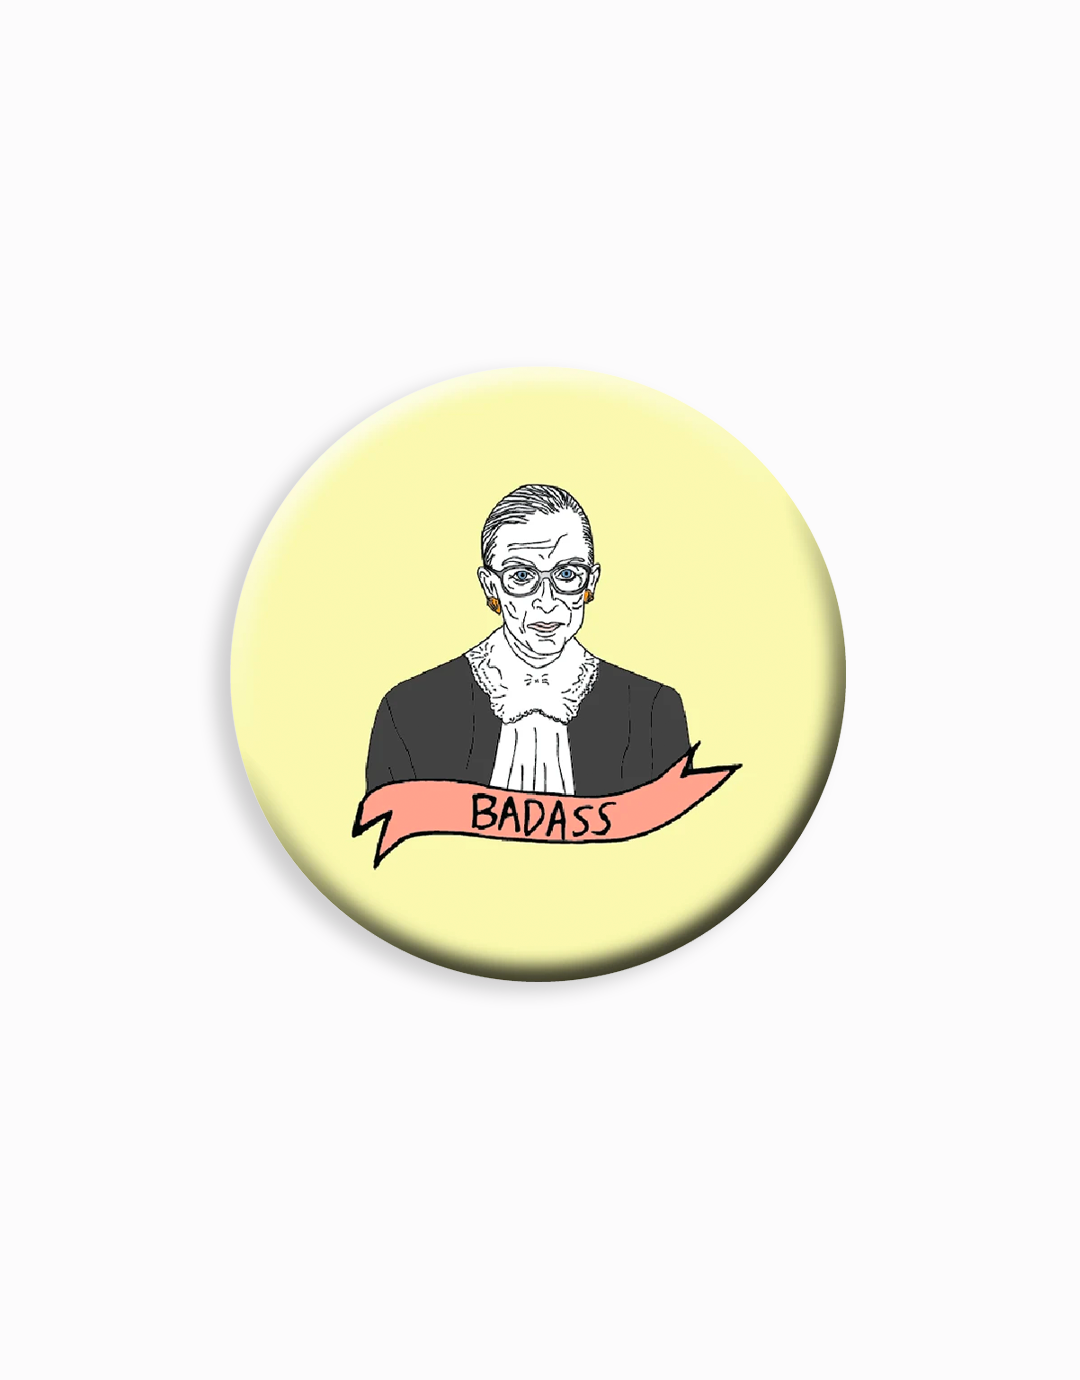 Ruth Bader Ginsburg 'Badass' Button